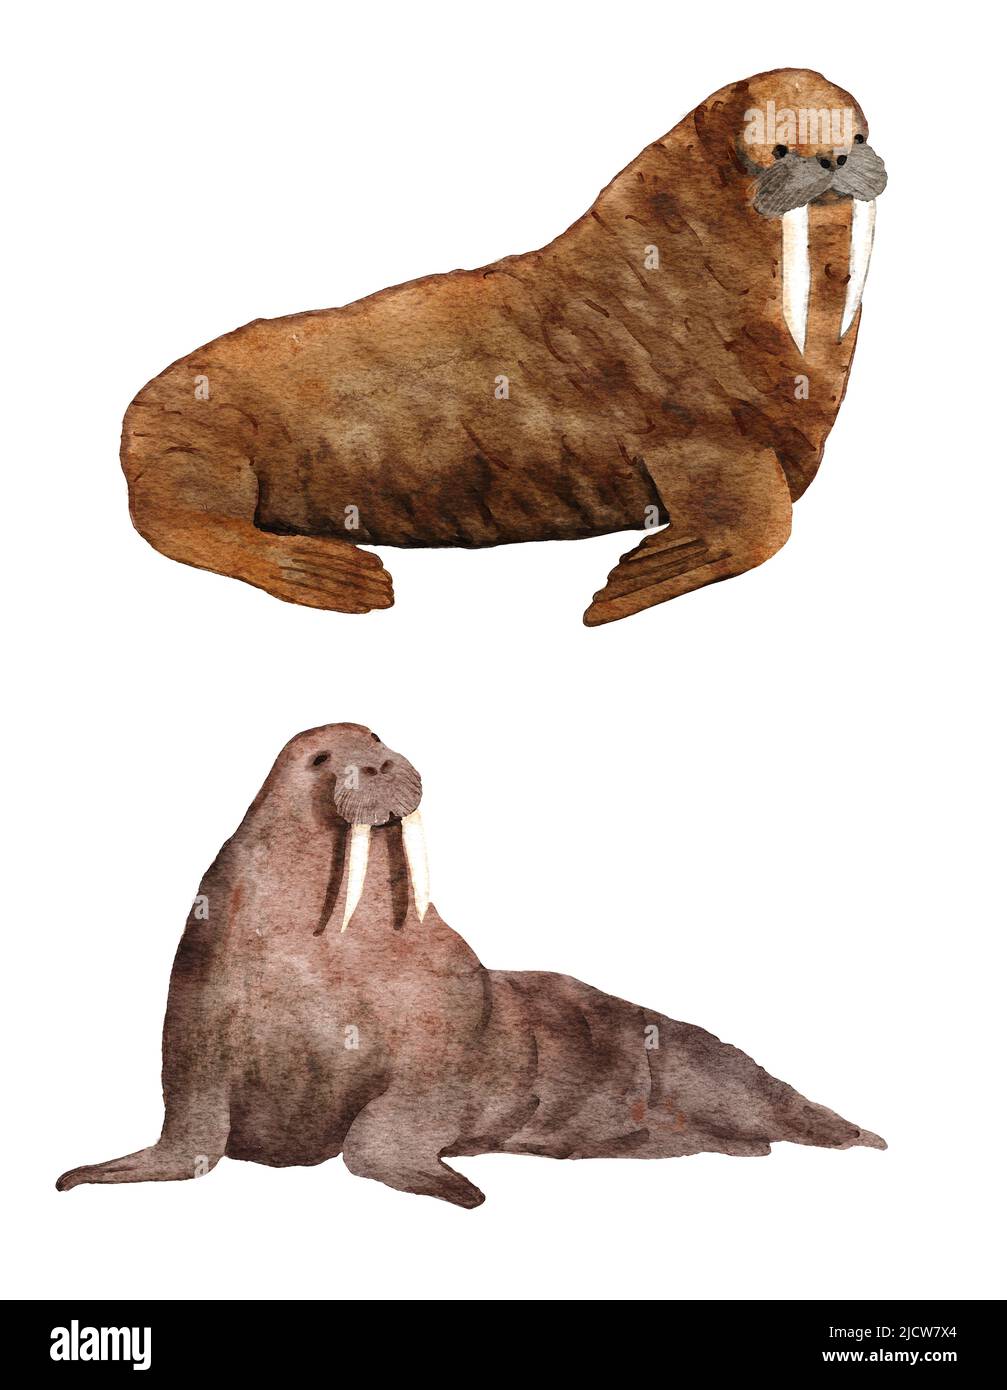 Watercolor hadn drawn illustration of atlantic walrus, endangered sea ocean species. Marine mammal wildlife, north polar animal, brown fur. Underwater creature ecology environment Stock Photo